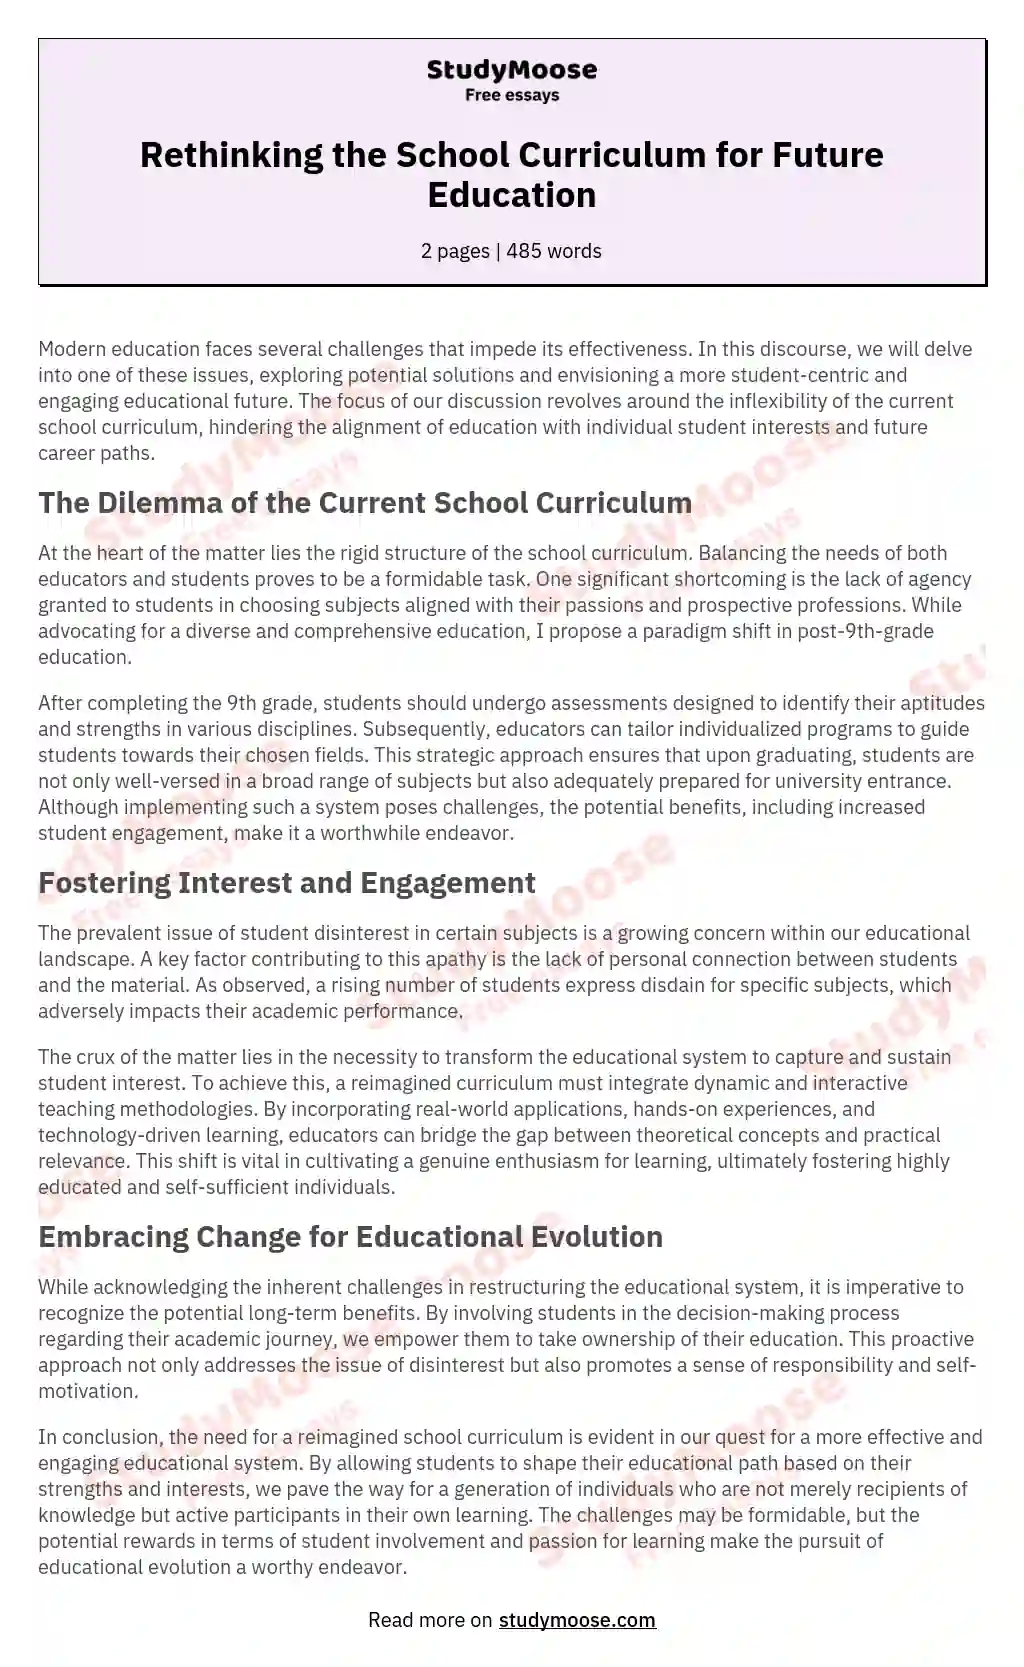 Rethinking the School Curriculum for Future Education essay